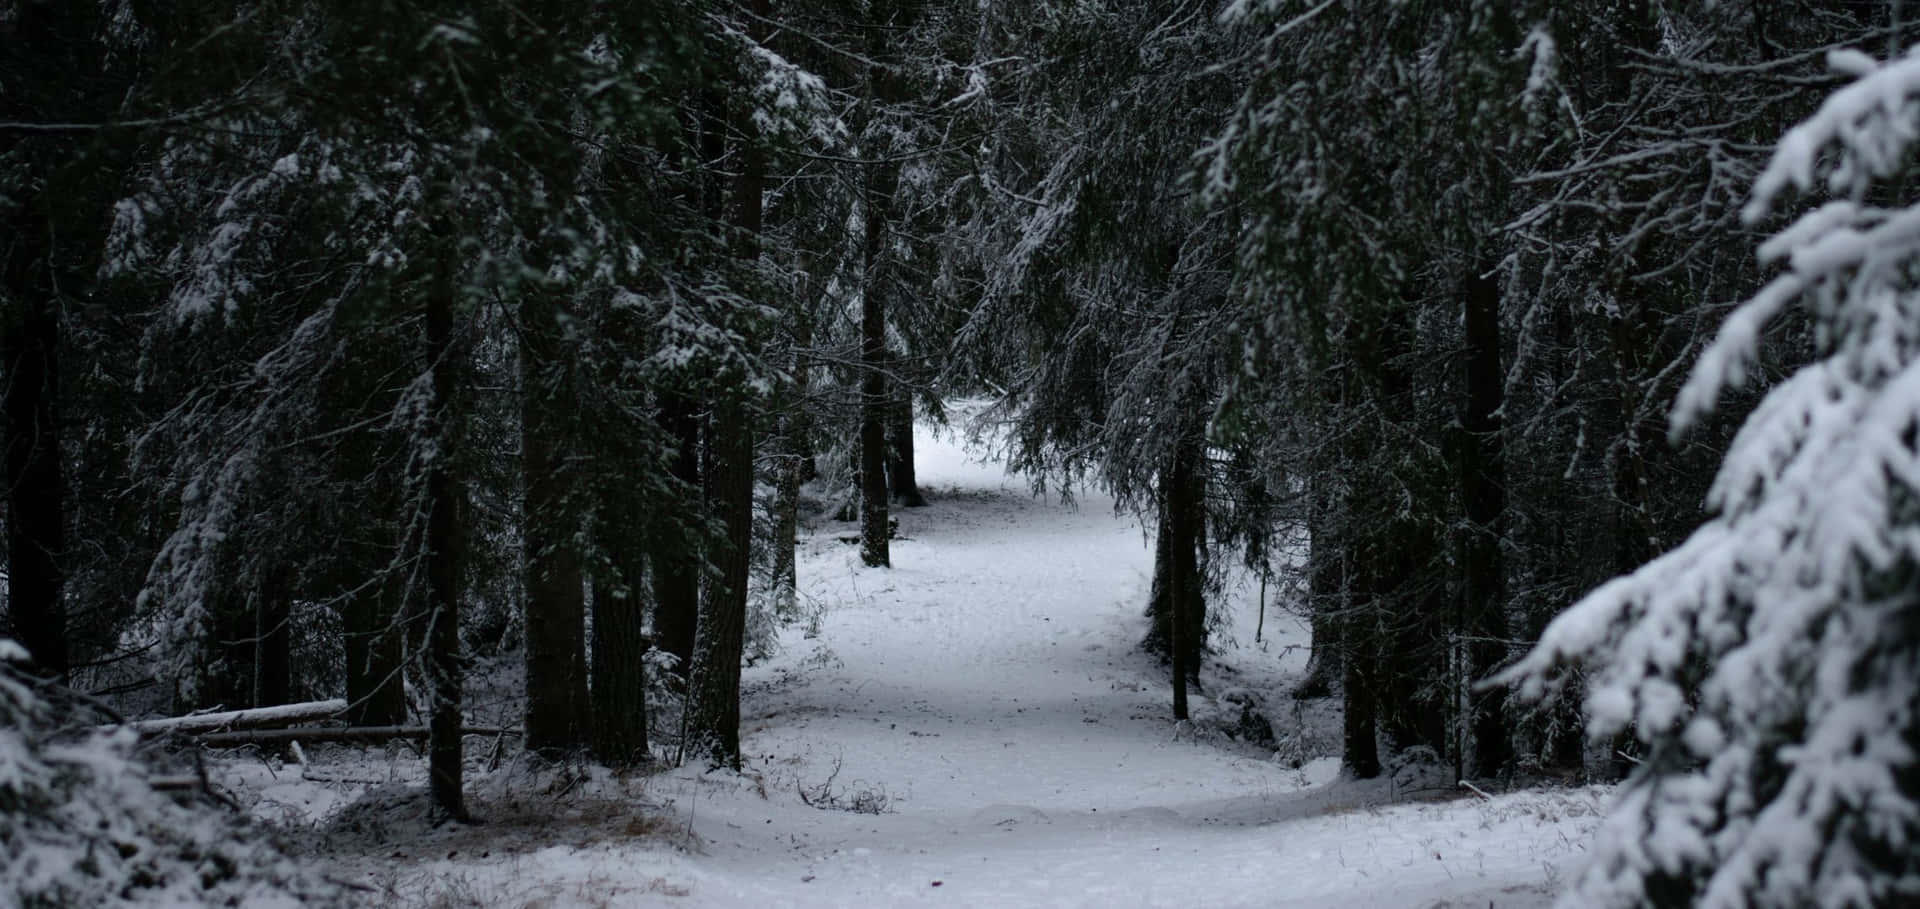 A Snowy Path Through A Forest Wallpaper